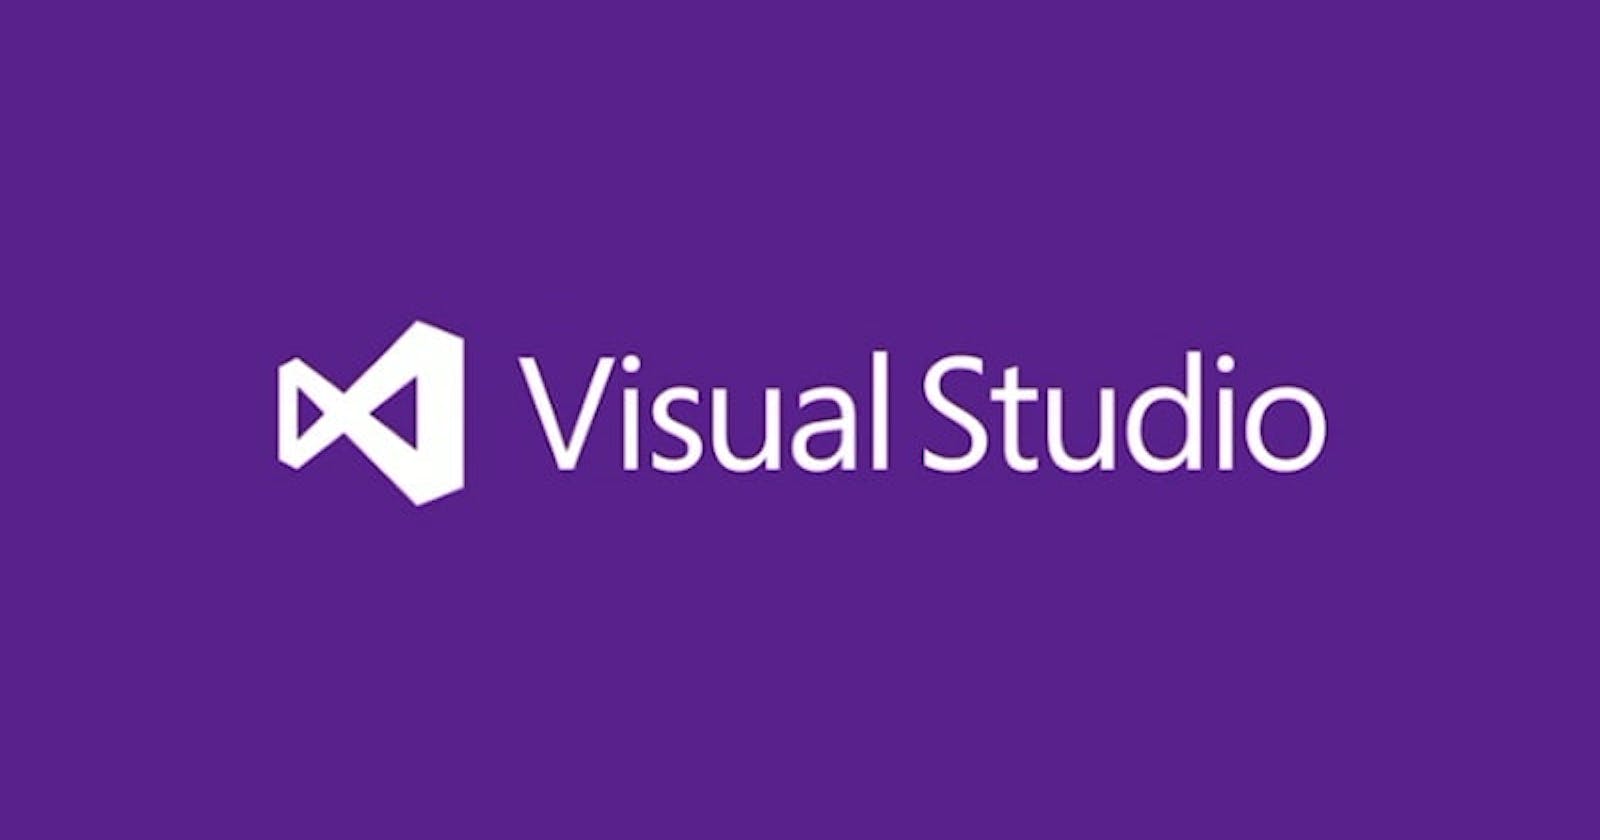 Live Unit Testing in Visual Studio